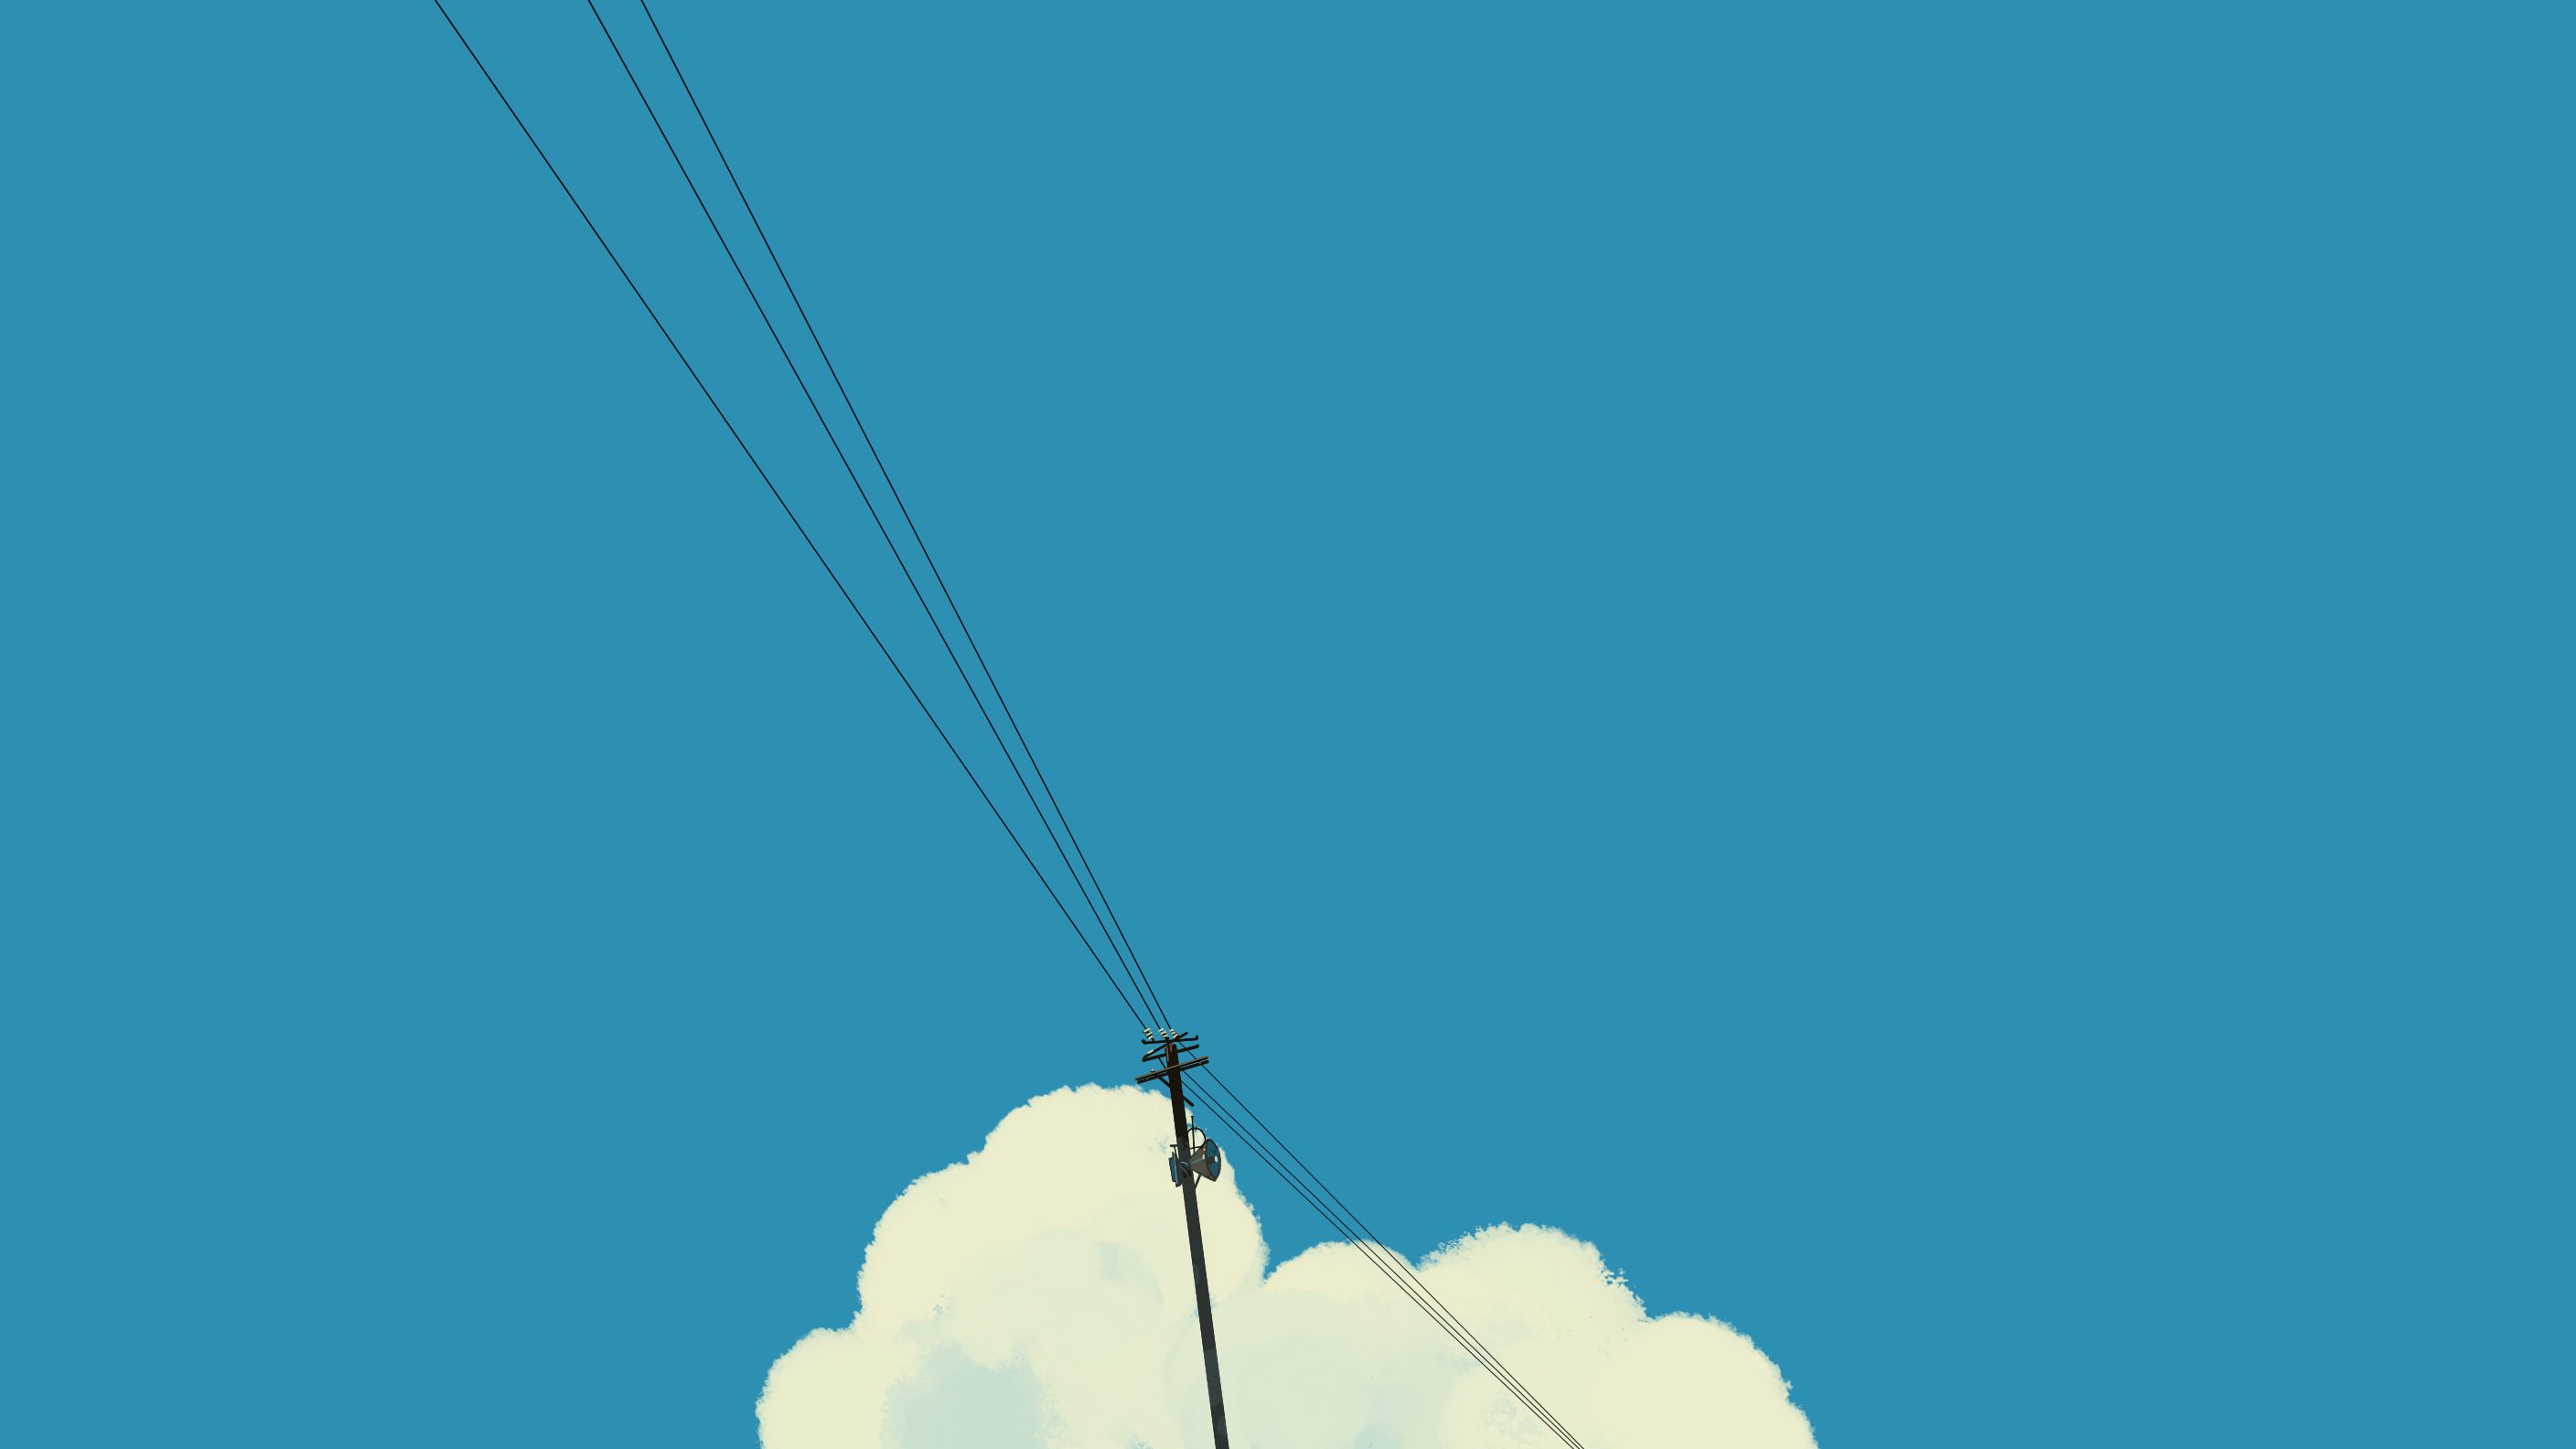 Digital Art Artwork Illustration Sky Minimalism Clouds Utility Pole Blue Simple Background 2816x1584